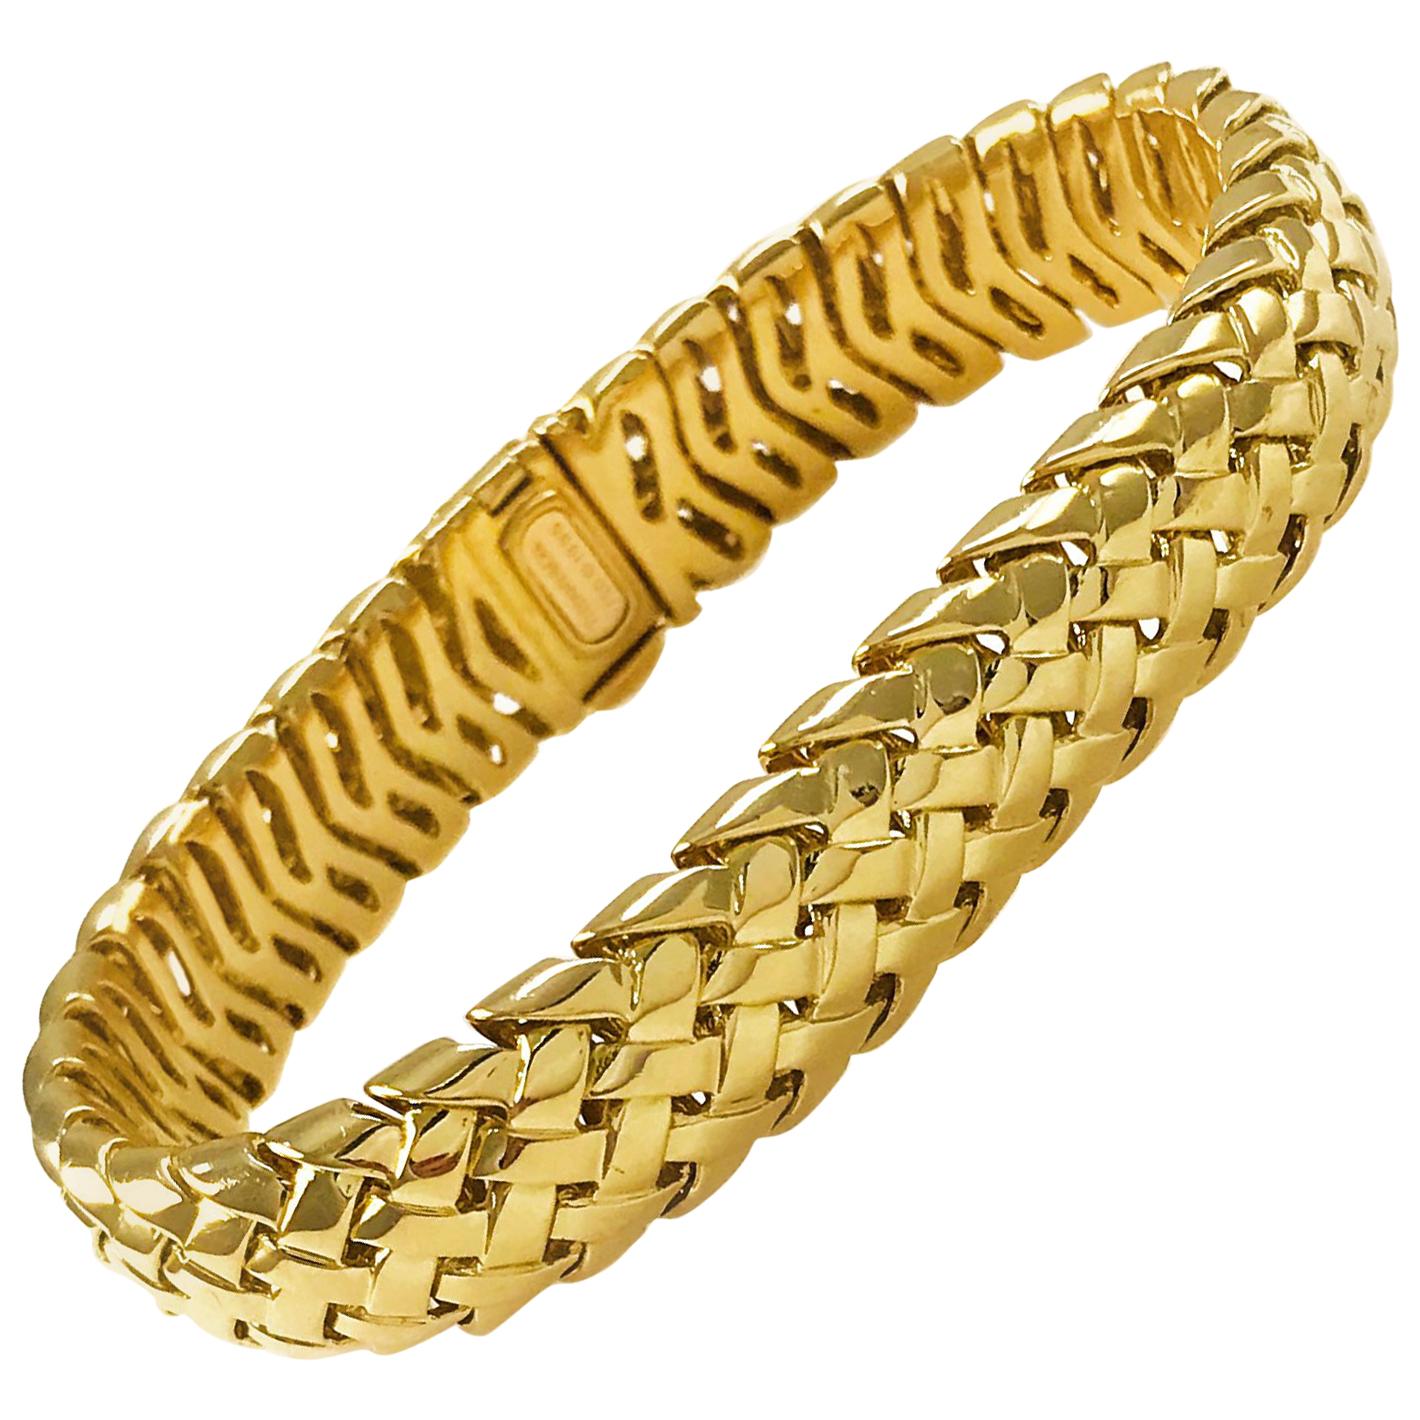 Tiffany & Co. 18 Karat Gold Vannerie Basket Weave Bracelet, circa 1995